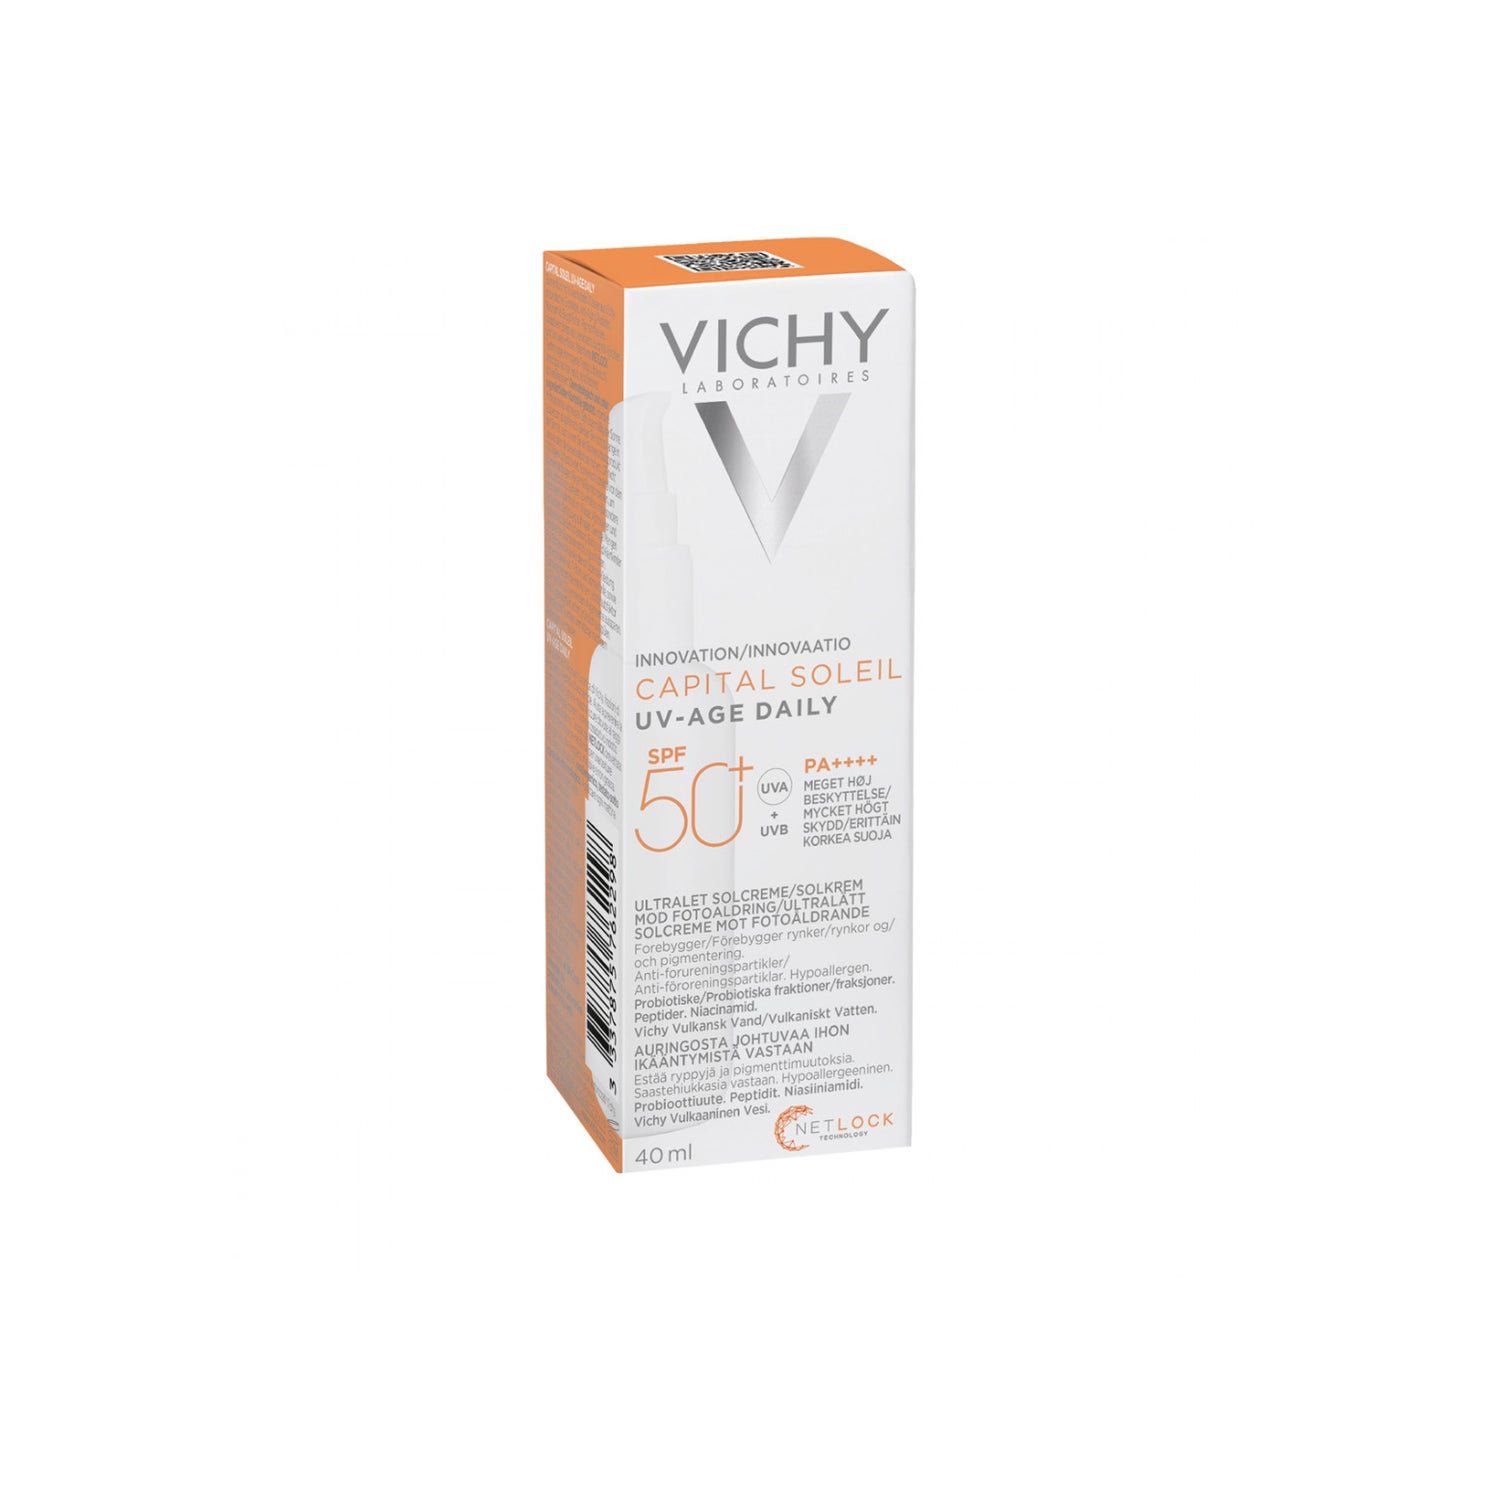 Vichy uv age daily